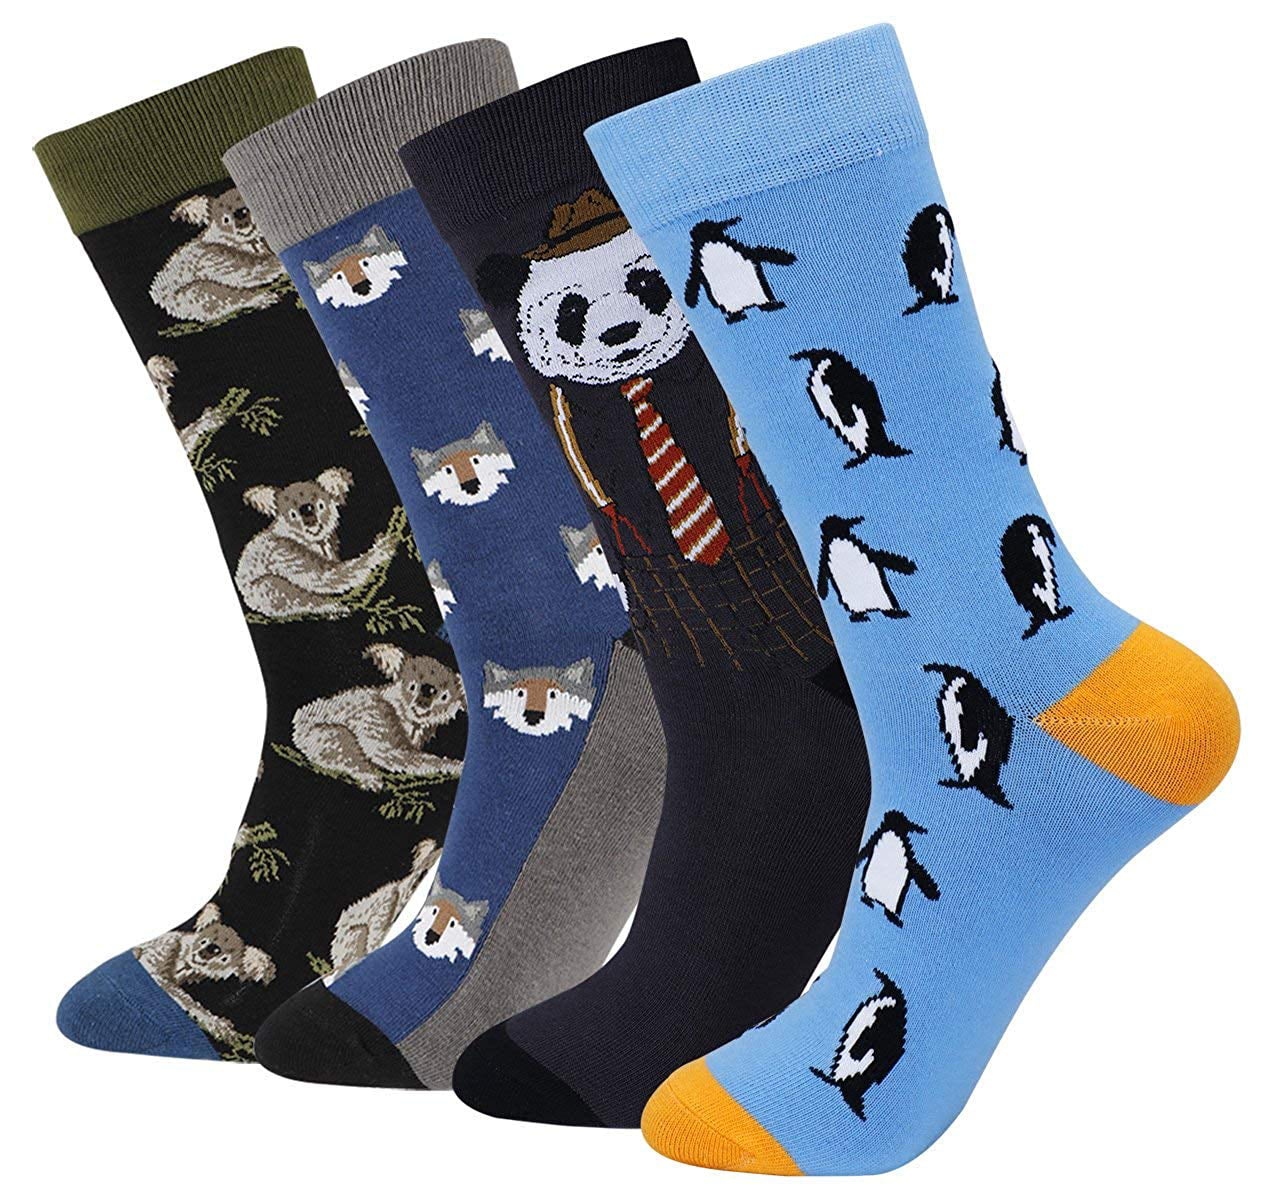 Mens Unisex Socks Funny Animal Fruit Breathable Warm Long Combed Cotton Socks 